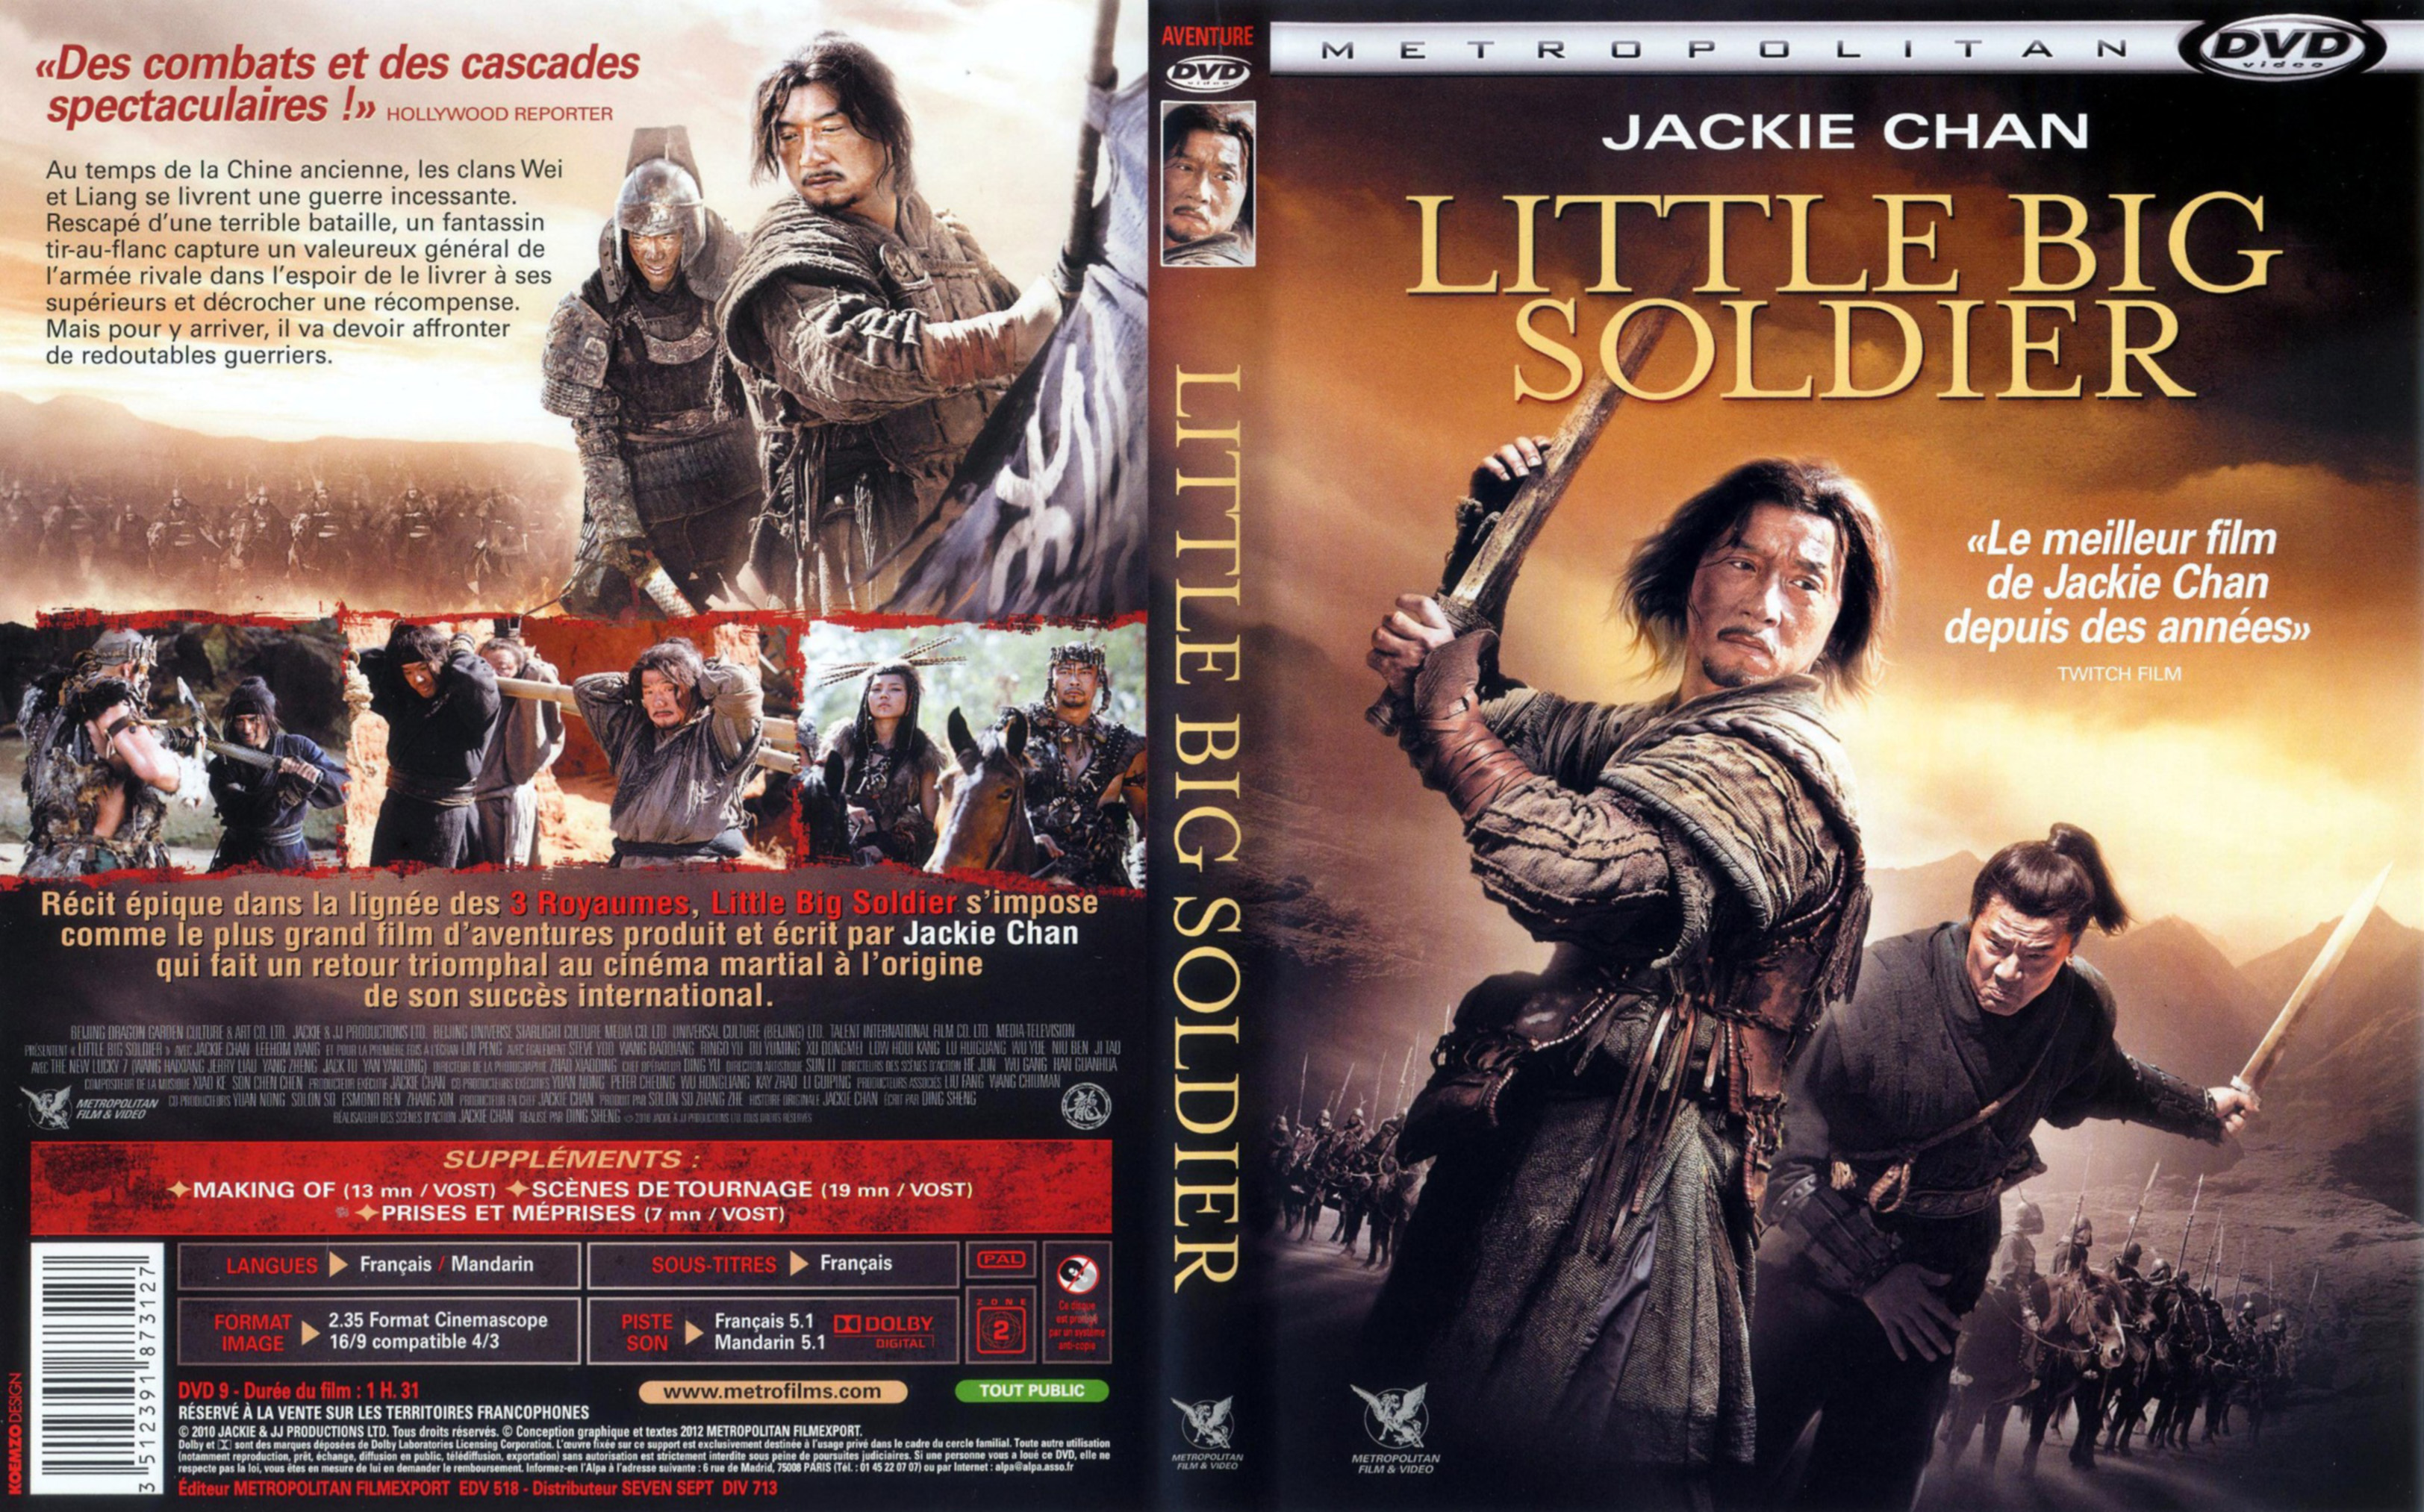 Jaquette DVD Little big soldier